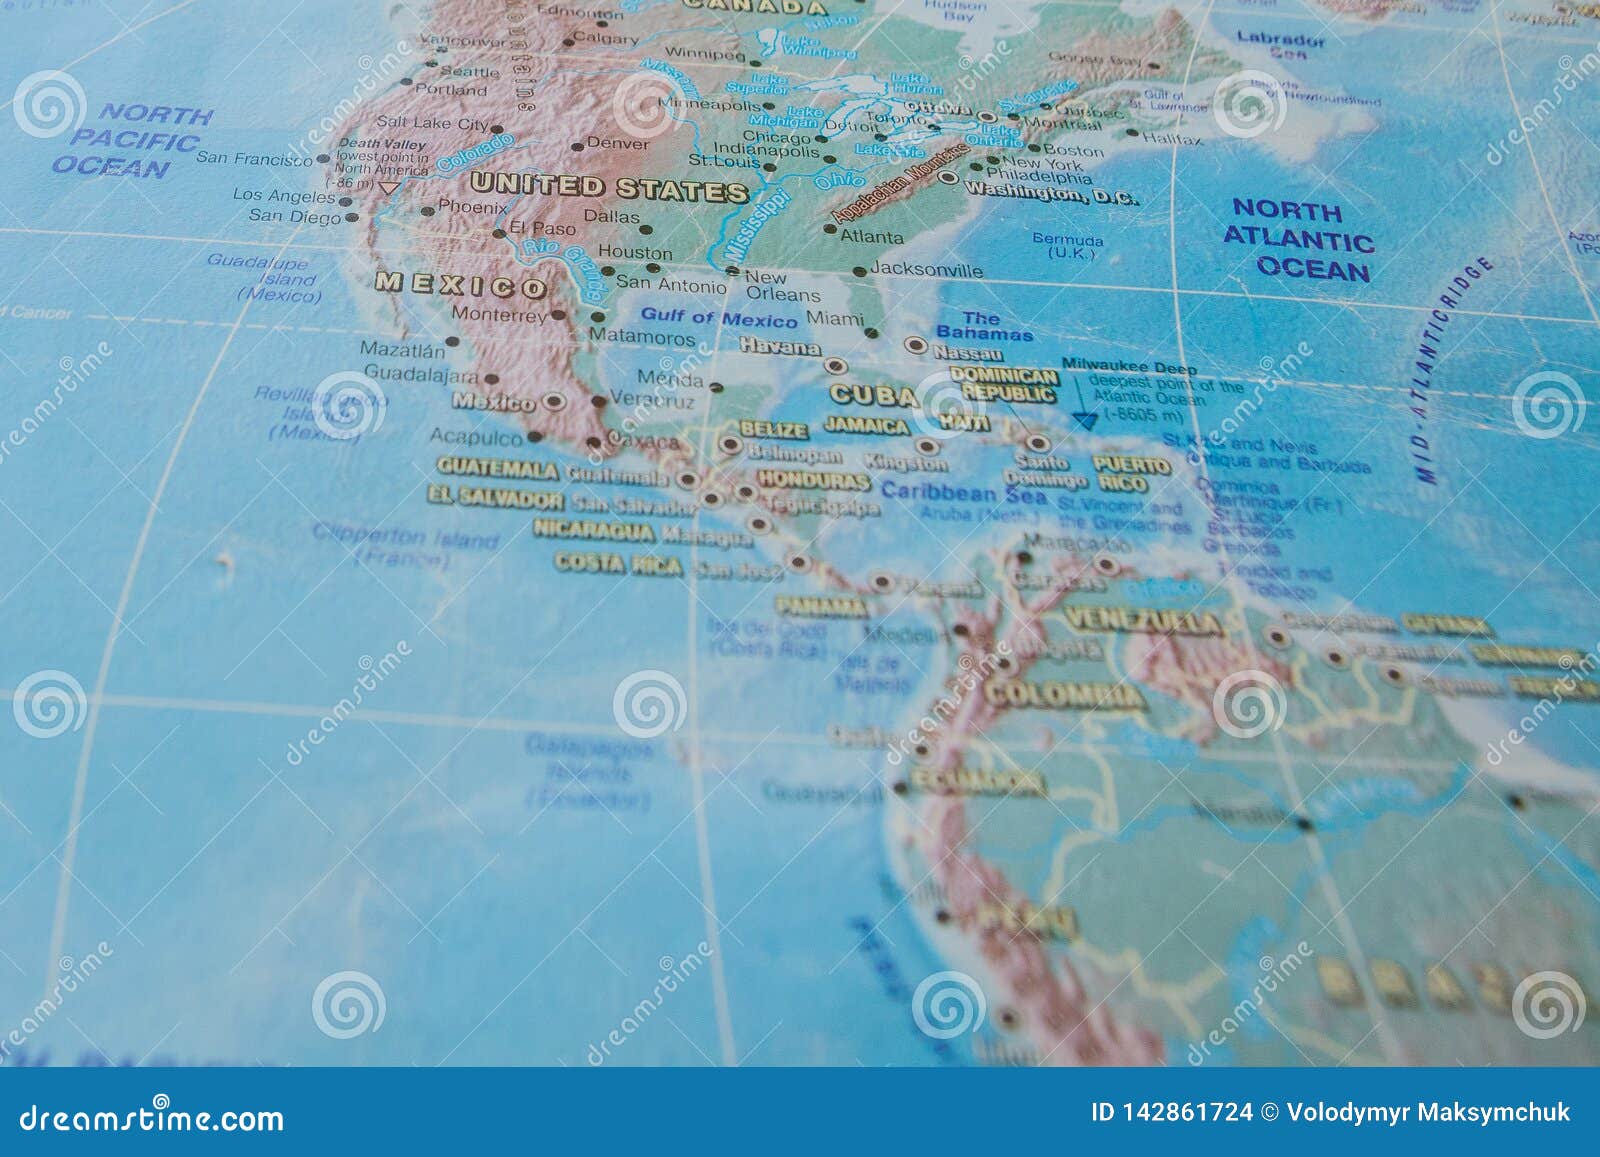 Мехико география 7 класс. Фоки карта. От Мехико до Лос-Анджелеса география 7 класс. Focus Map.